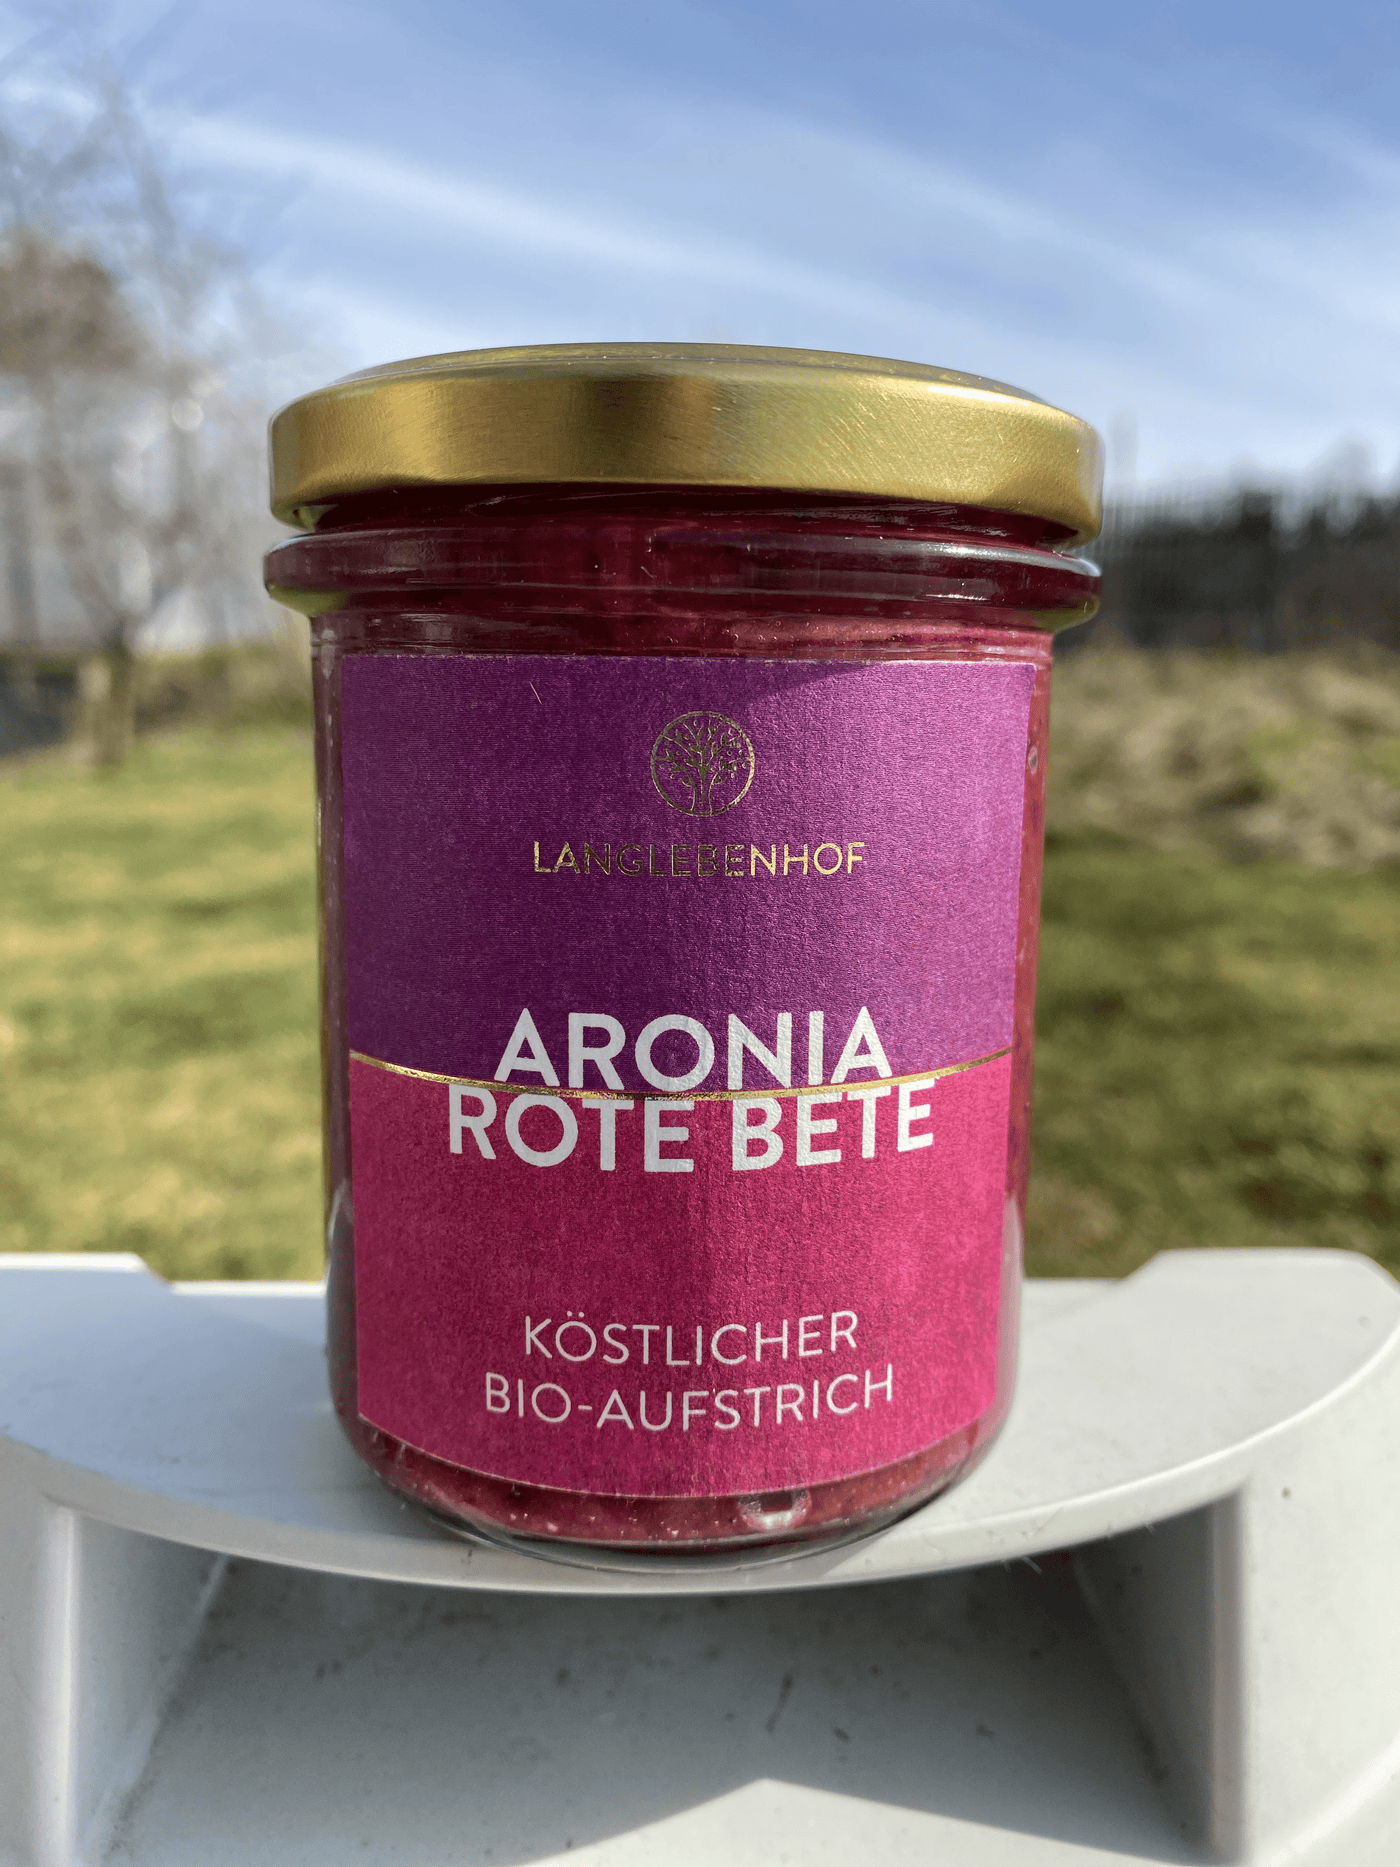 Super Food Aronia-Rote Bete - BIO